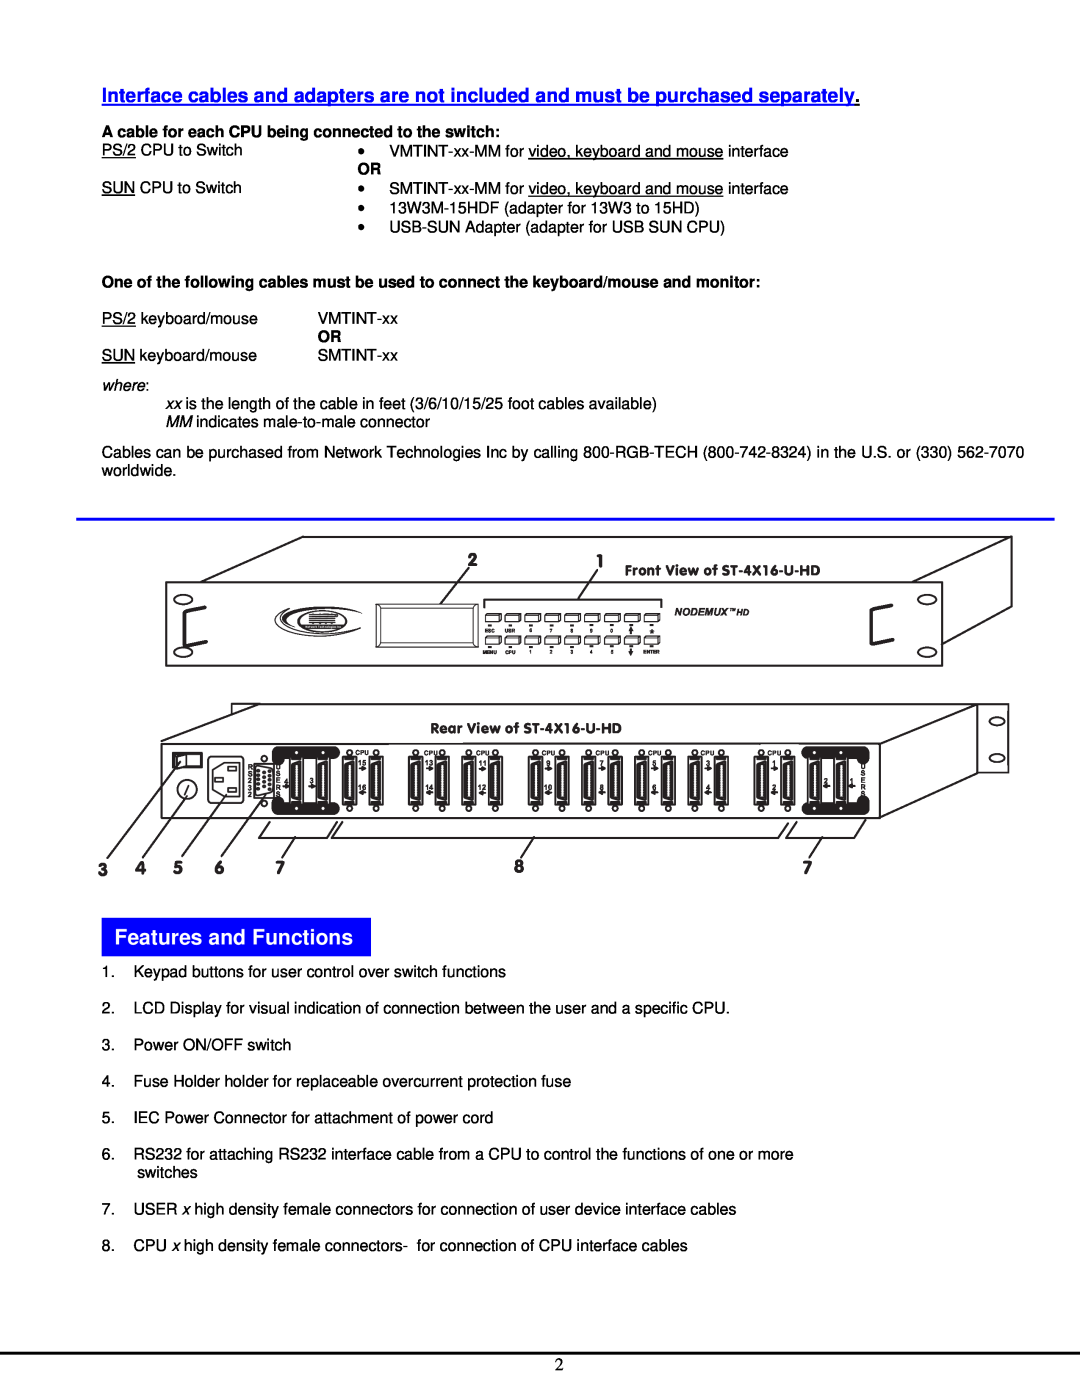 Network Technologies ST-NXM-U-HD manual FeaturesFeaturesandandFunctioFunctionss, where 